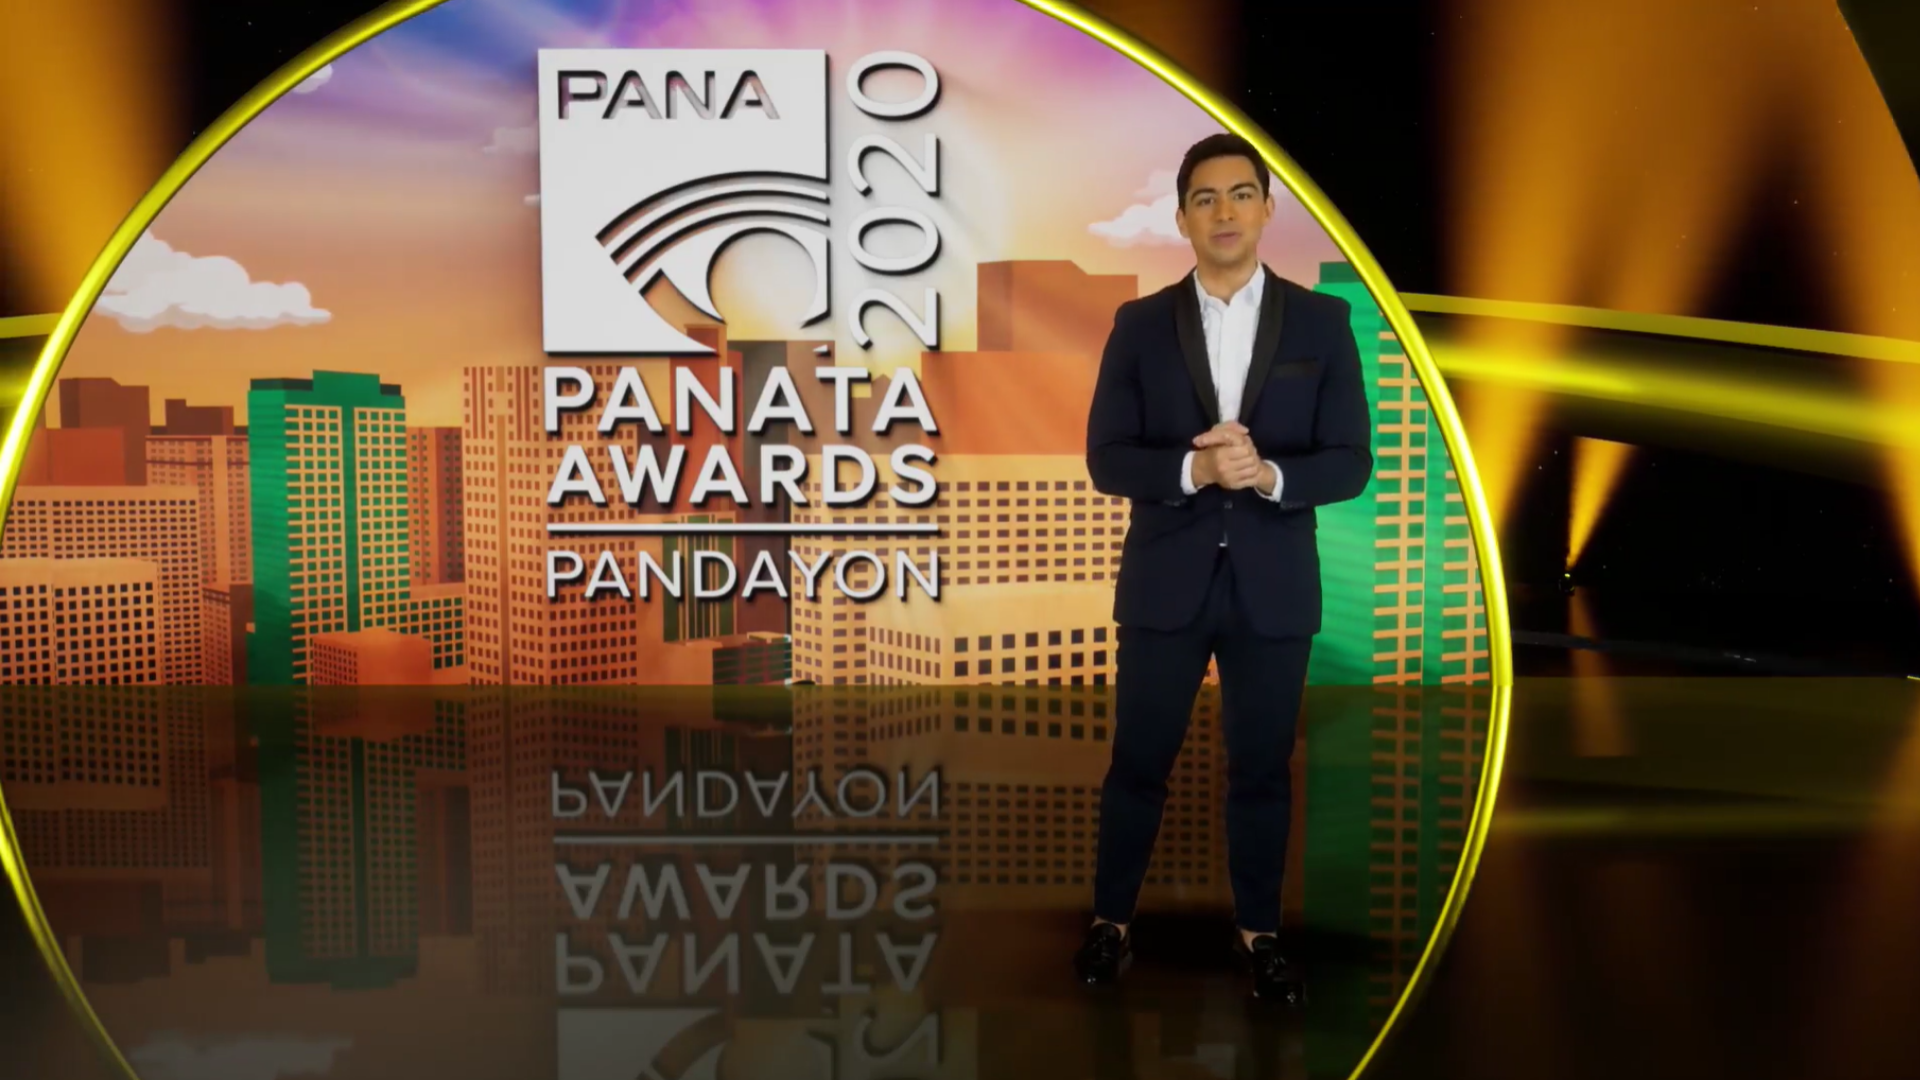 PANA Philippines_PANAta Awards_Jan21.png